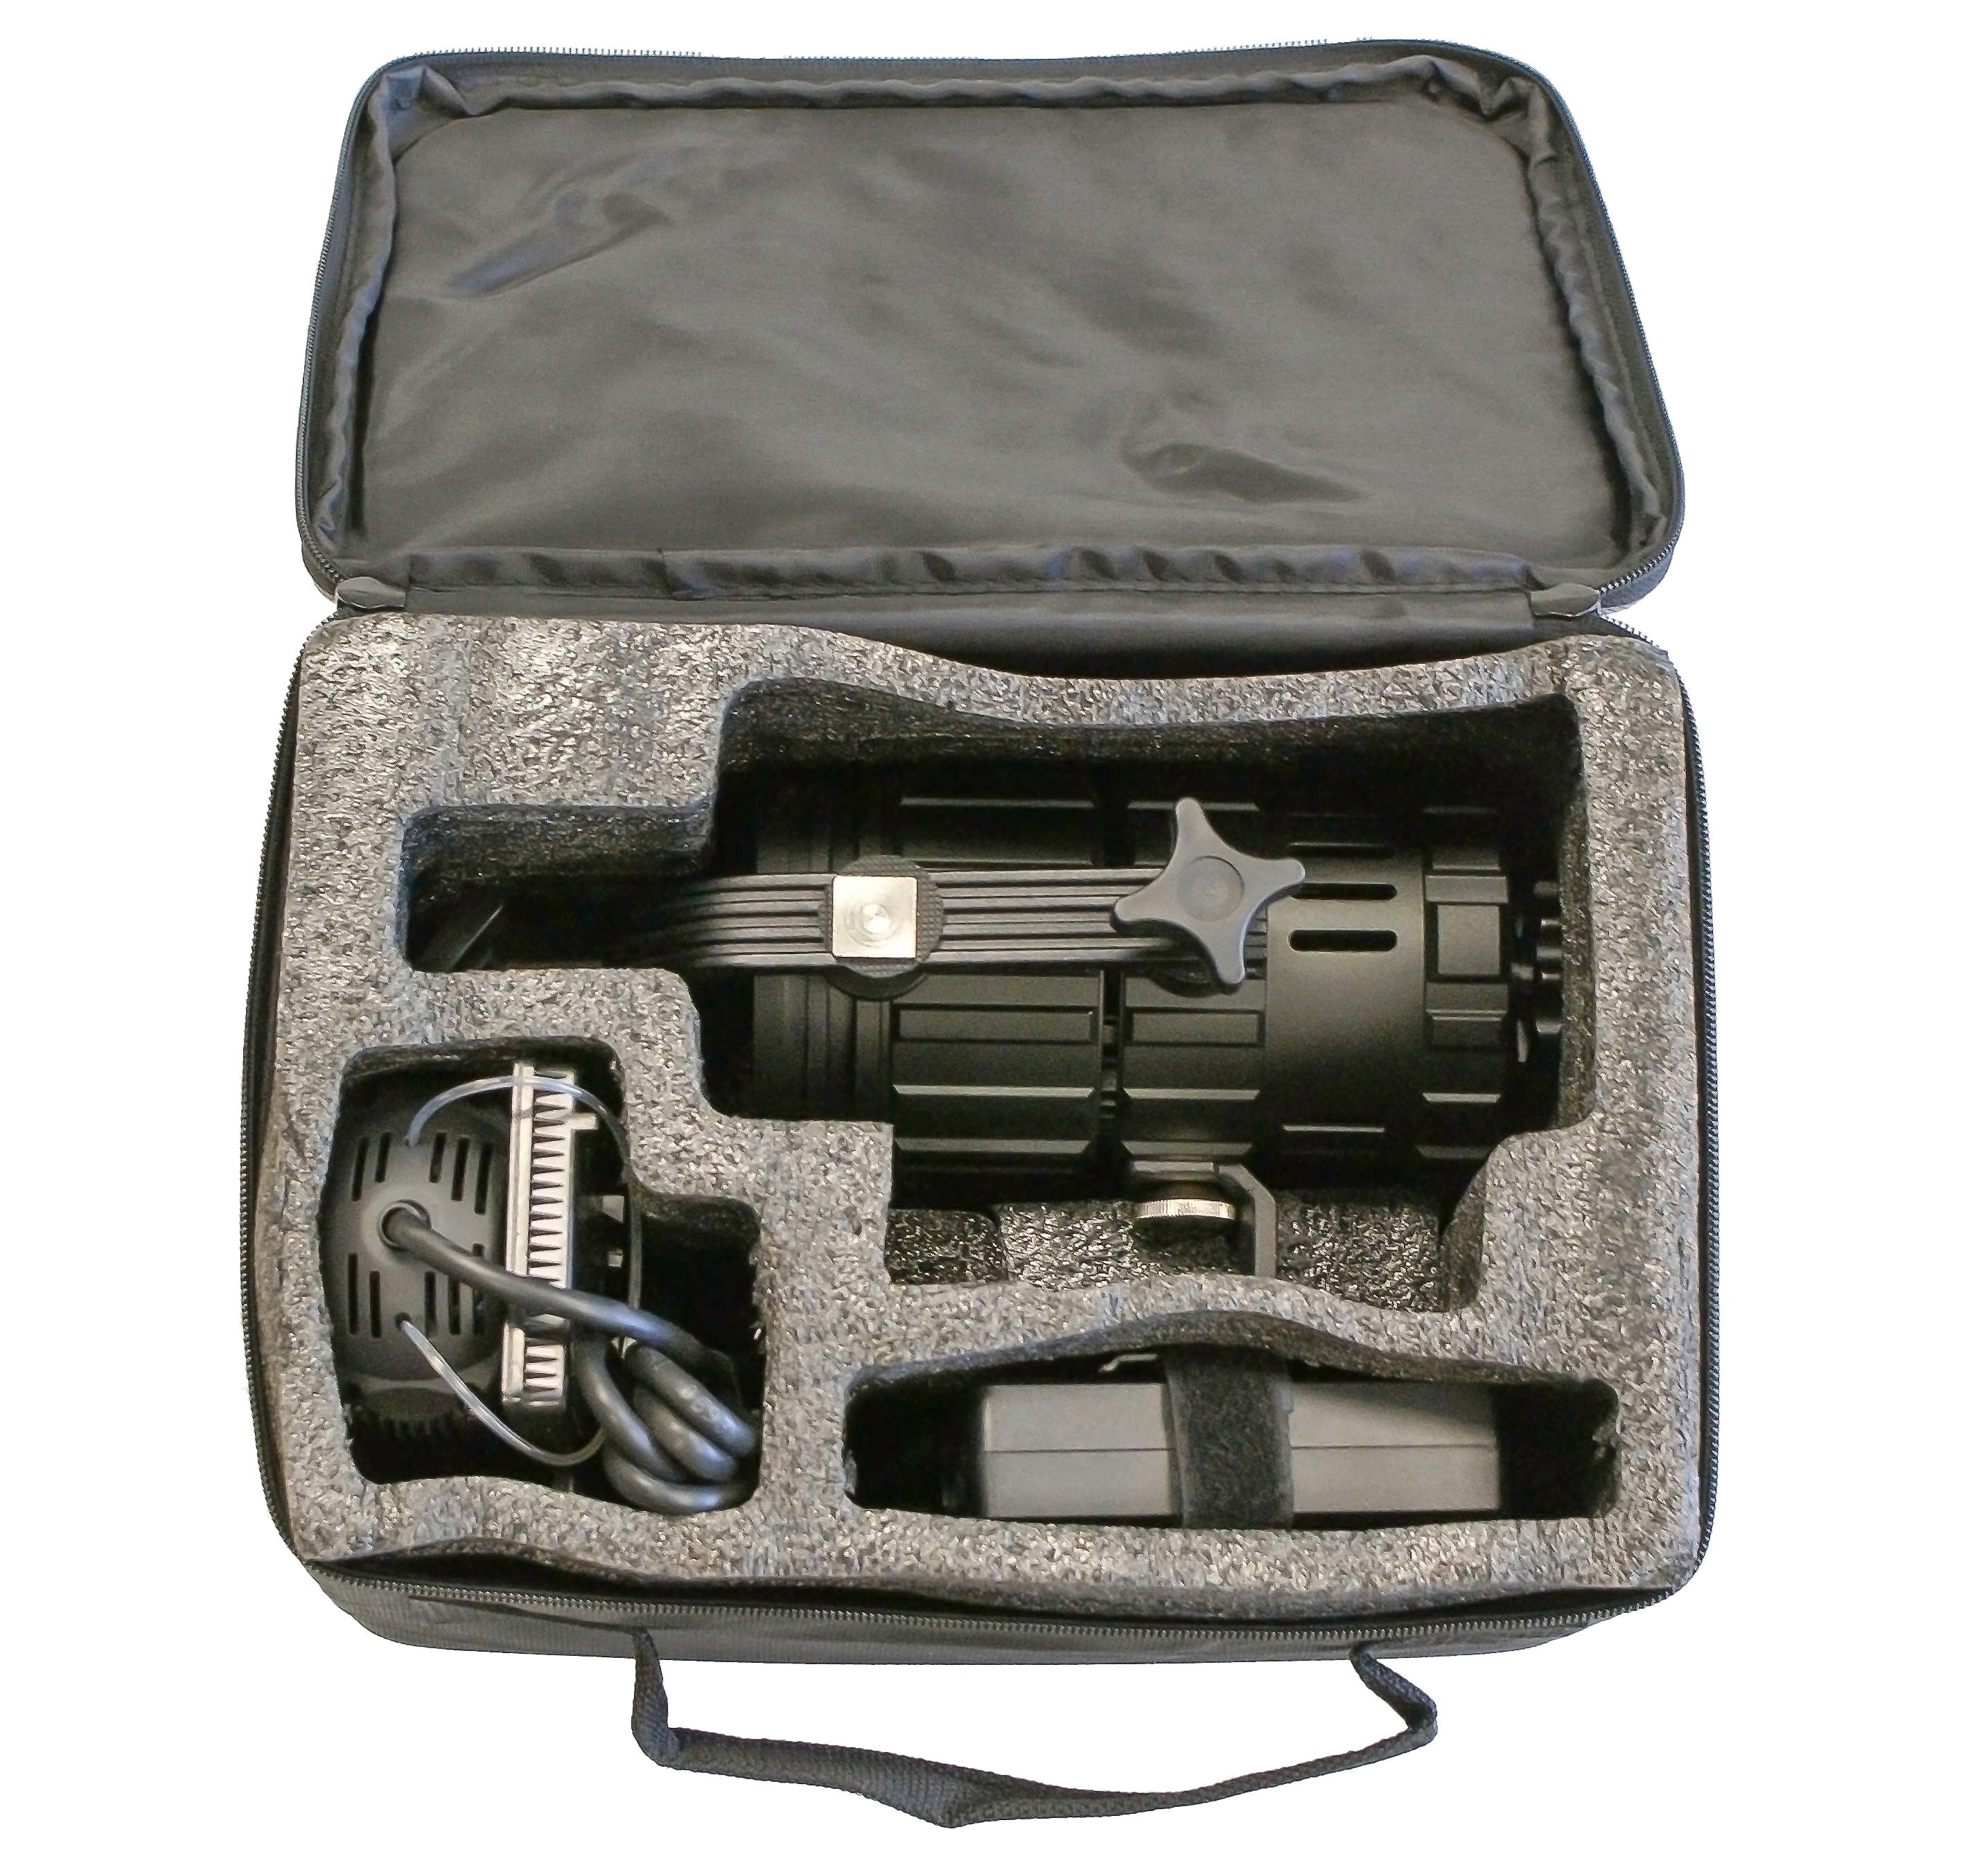 Pocket Cannon - Focusable LED Fresnel Kit